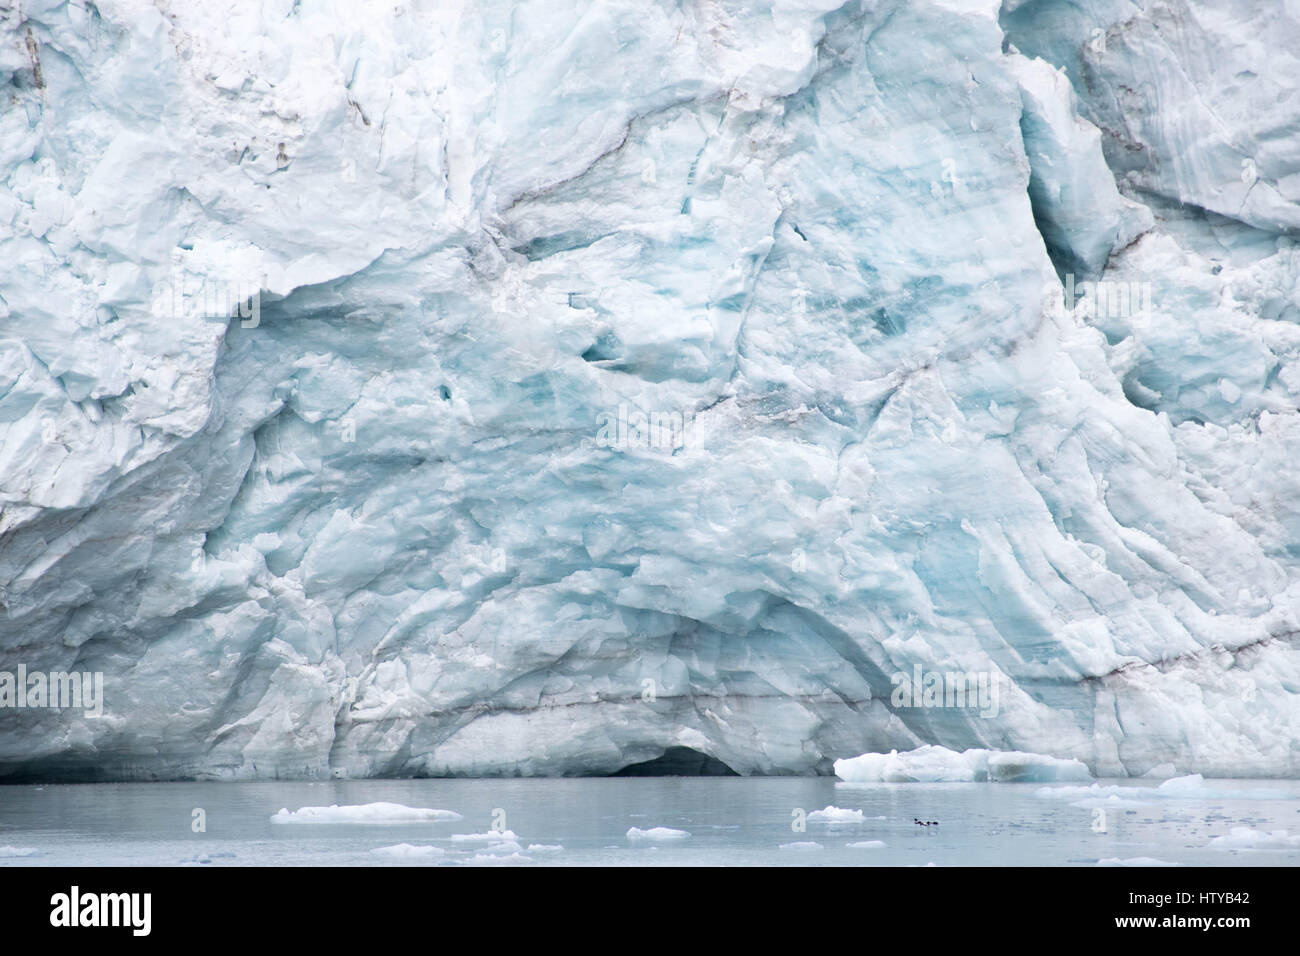 Glacier meeting the ocean at Svalbard in Norway Stock Photo